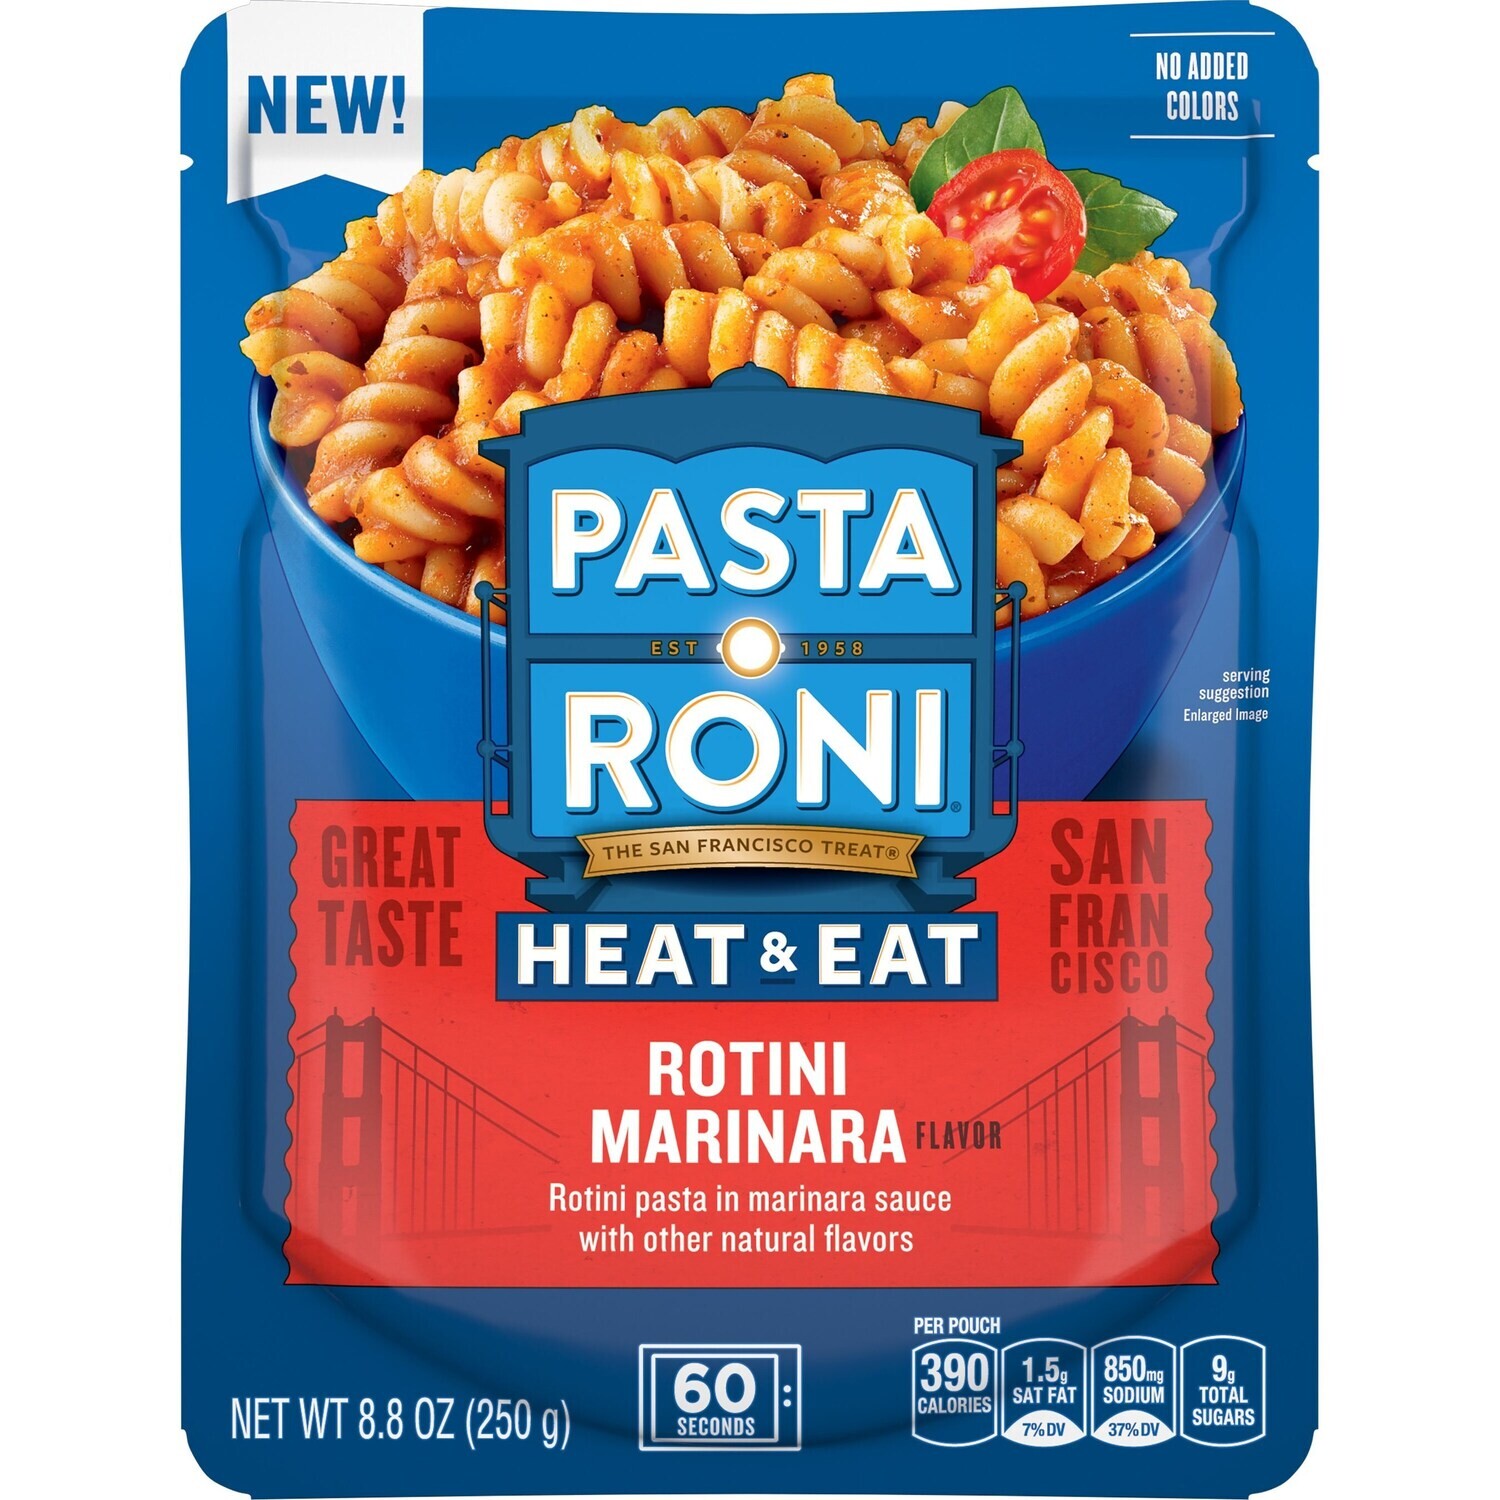 Pasta Roni Heat & Eat Microwavable Pouch - Rotini Marinara